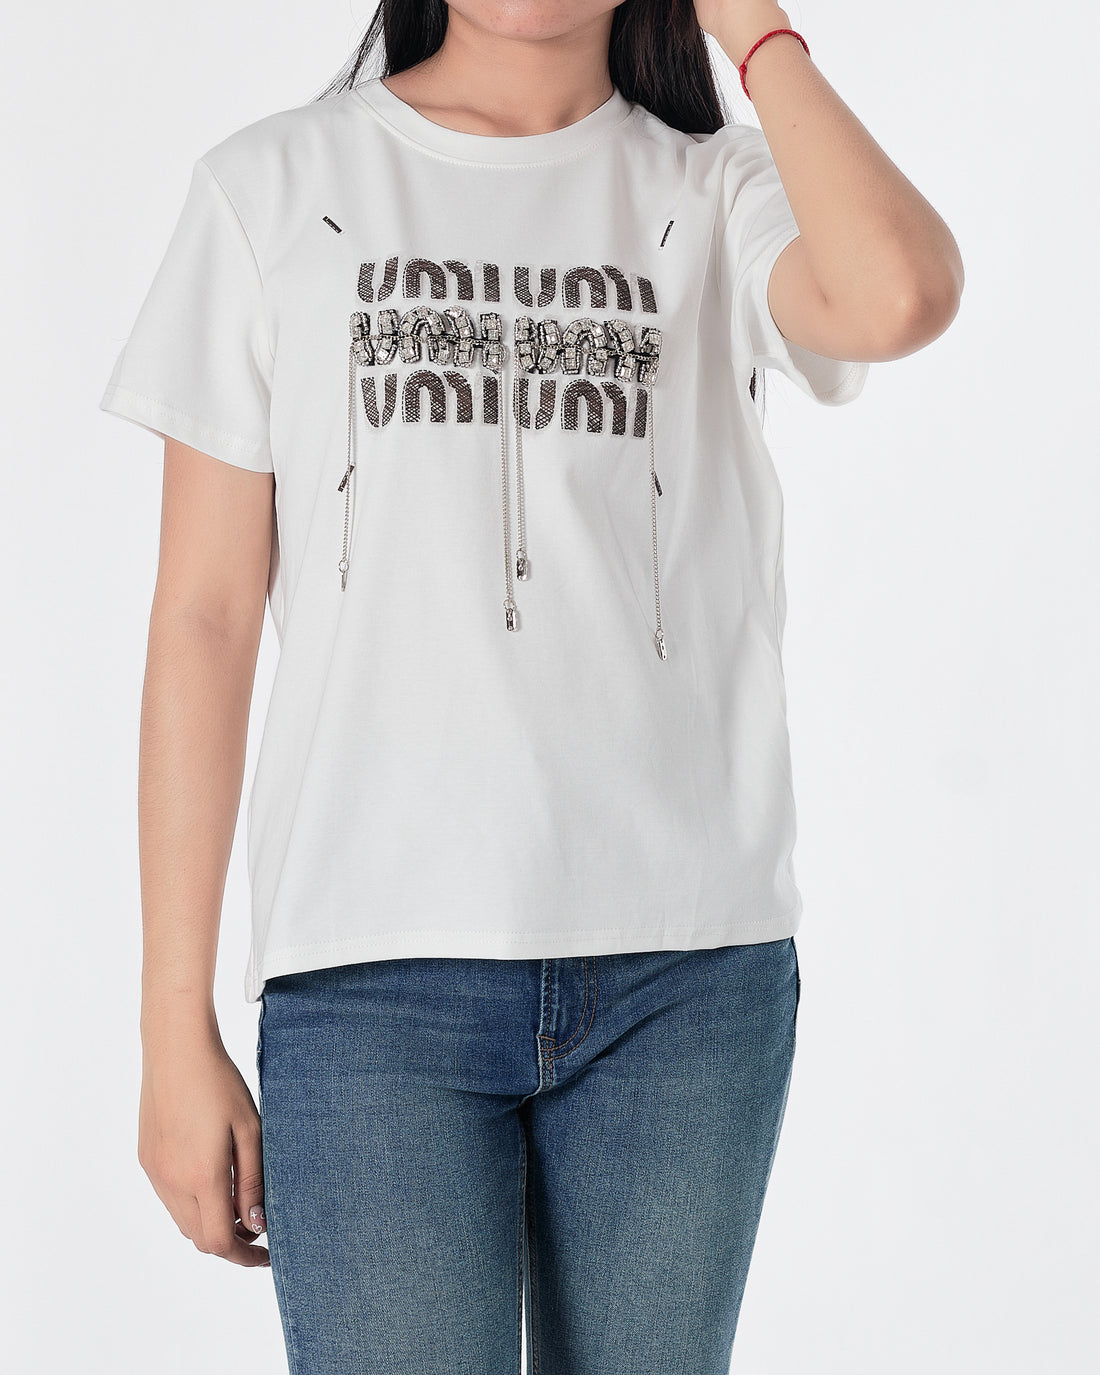 MIU Rhinestone Dripping Chain Lady White T-Shirt 28.90